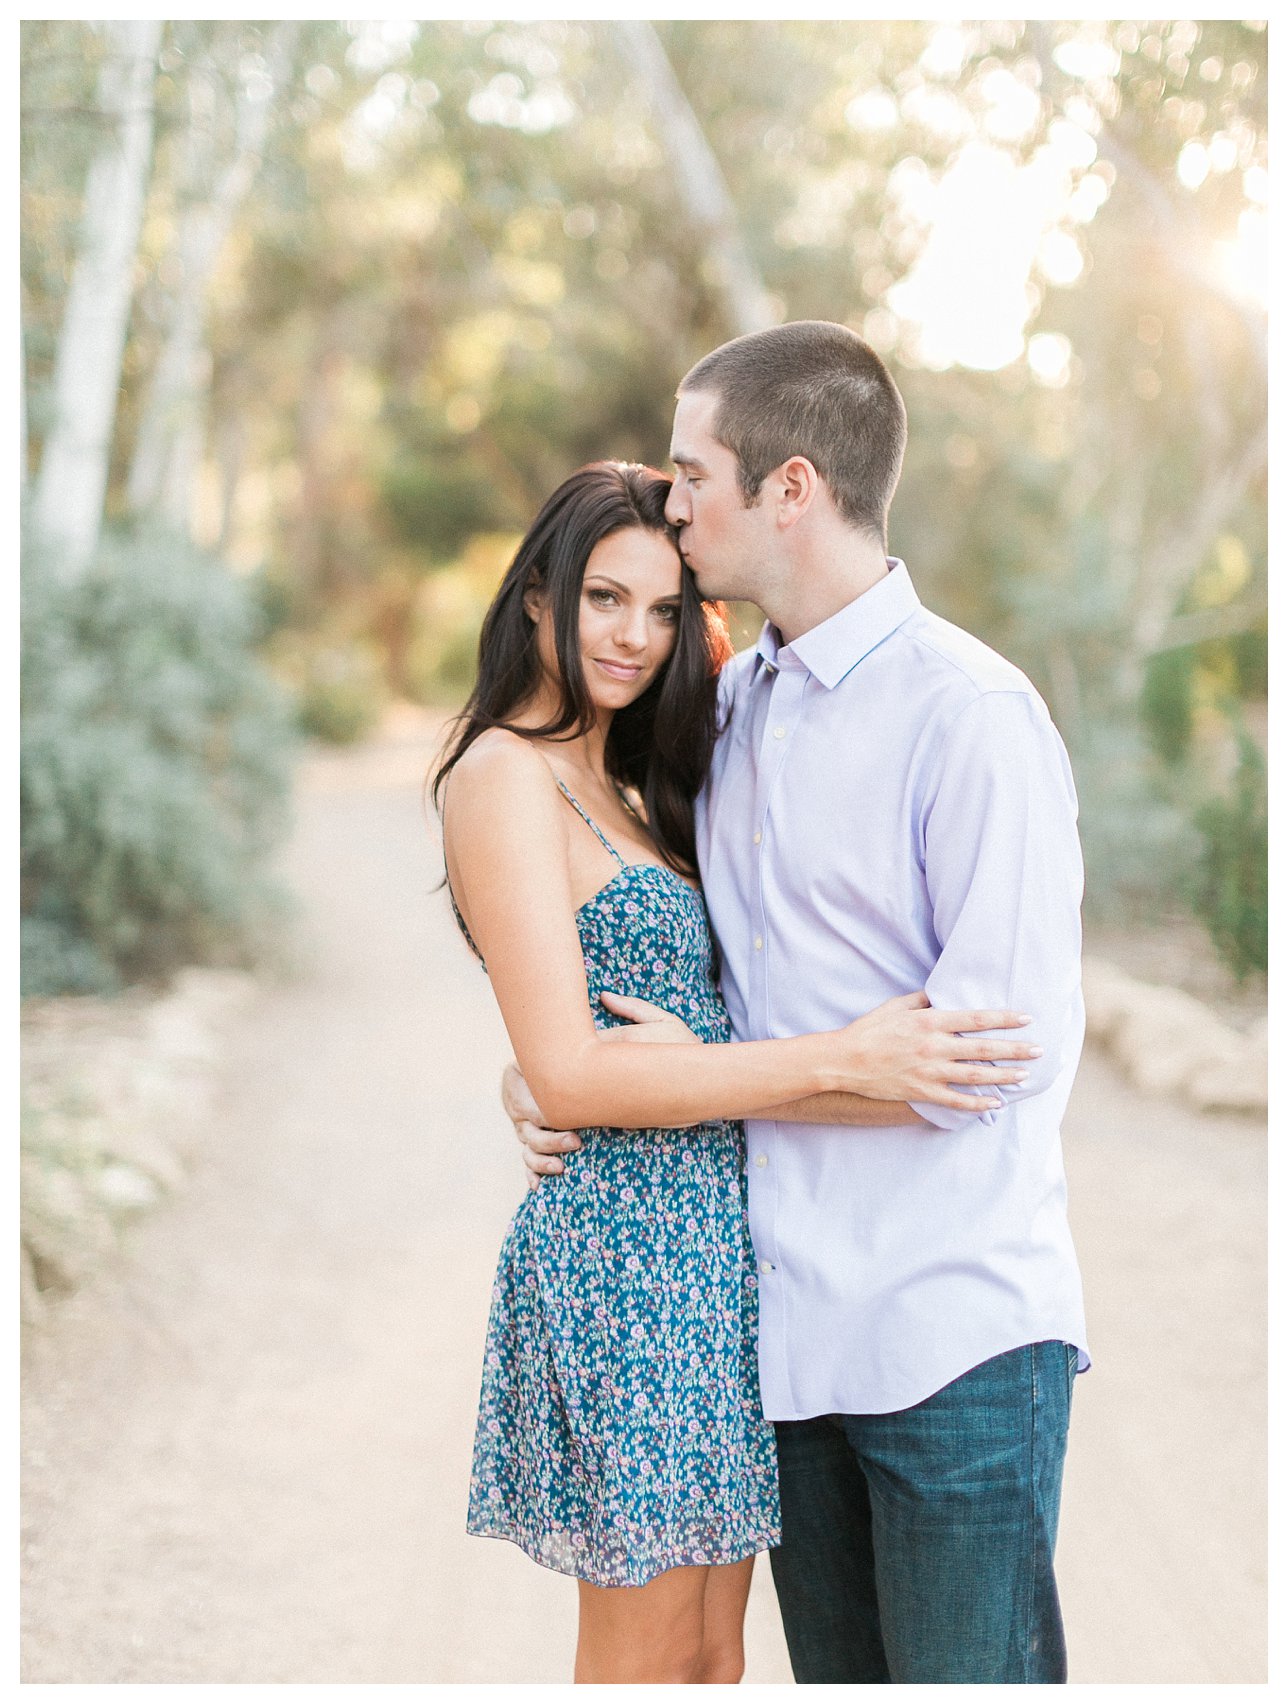 Boyce Thompson Arboretum engagement photos - Scottsdale Wedding Photographer | Rachel Solomon Photography_4716